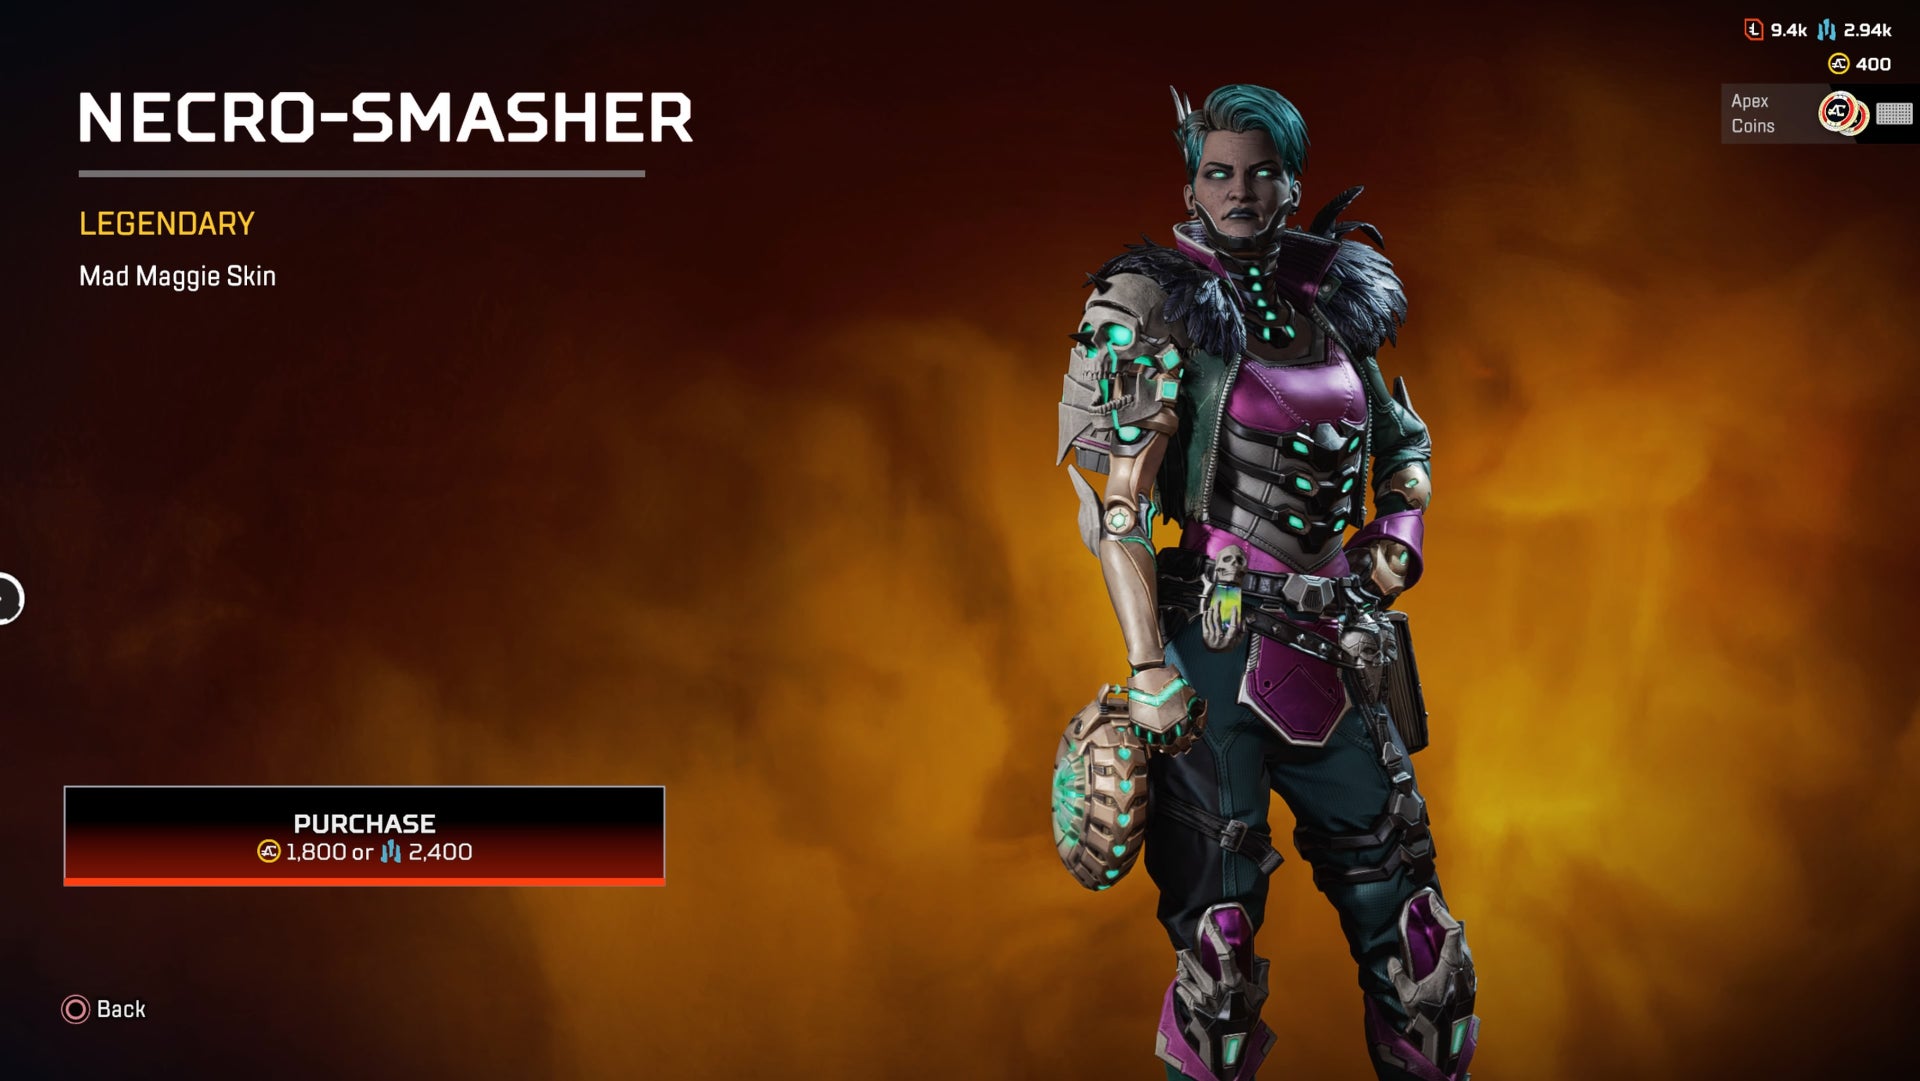 Apex Legends Necro-Smasher skin for Maggie